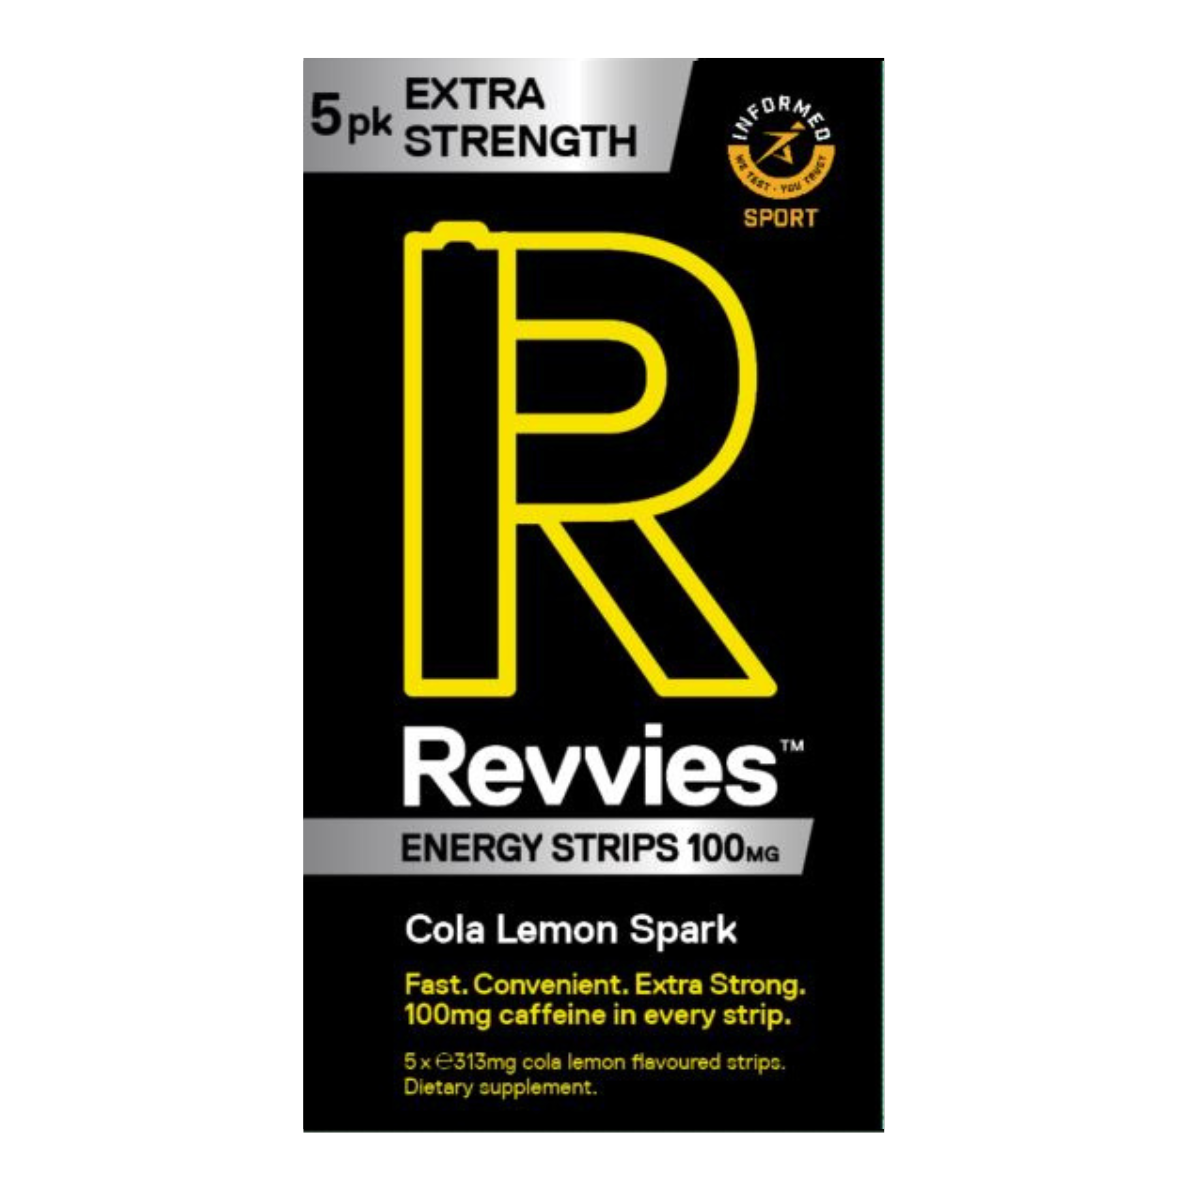 Revvies Cola Lemon Spark Energy Strips with 100mg of caffeine.